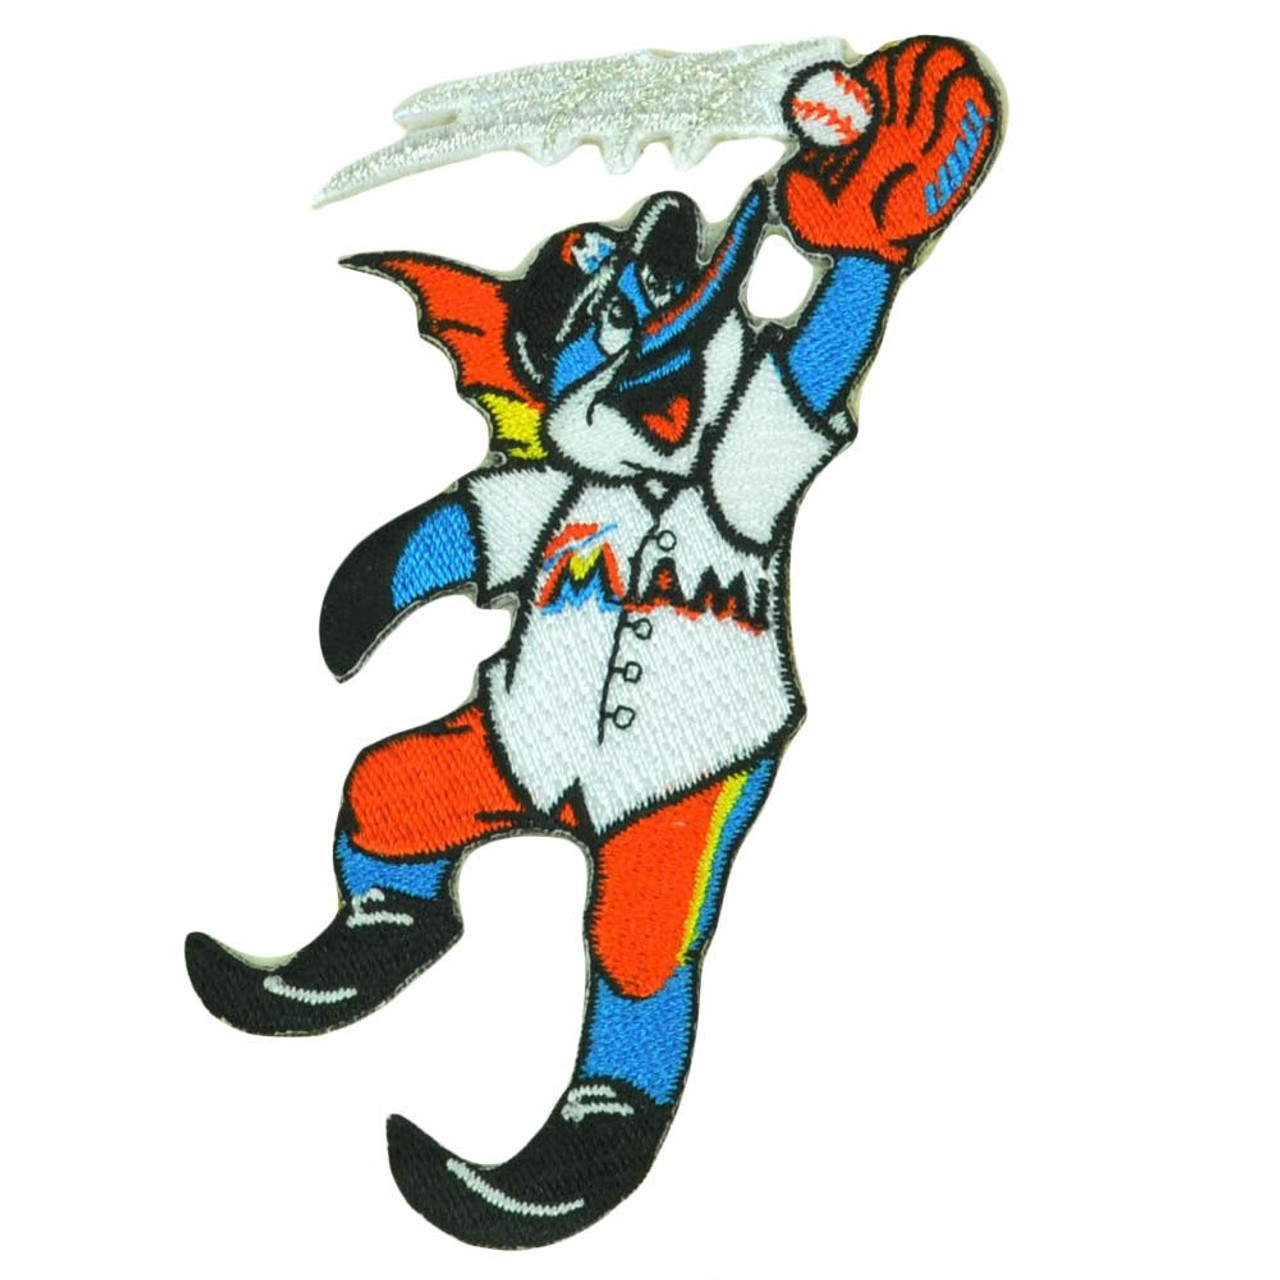 Billy the Marlin vs Raymond Tampa Bay Rays Baseball, Miami Marlins Baseball  Mascots MLB - Baseball - Sticker